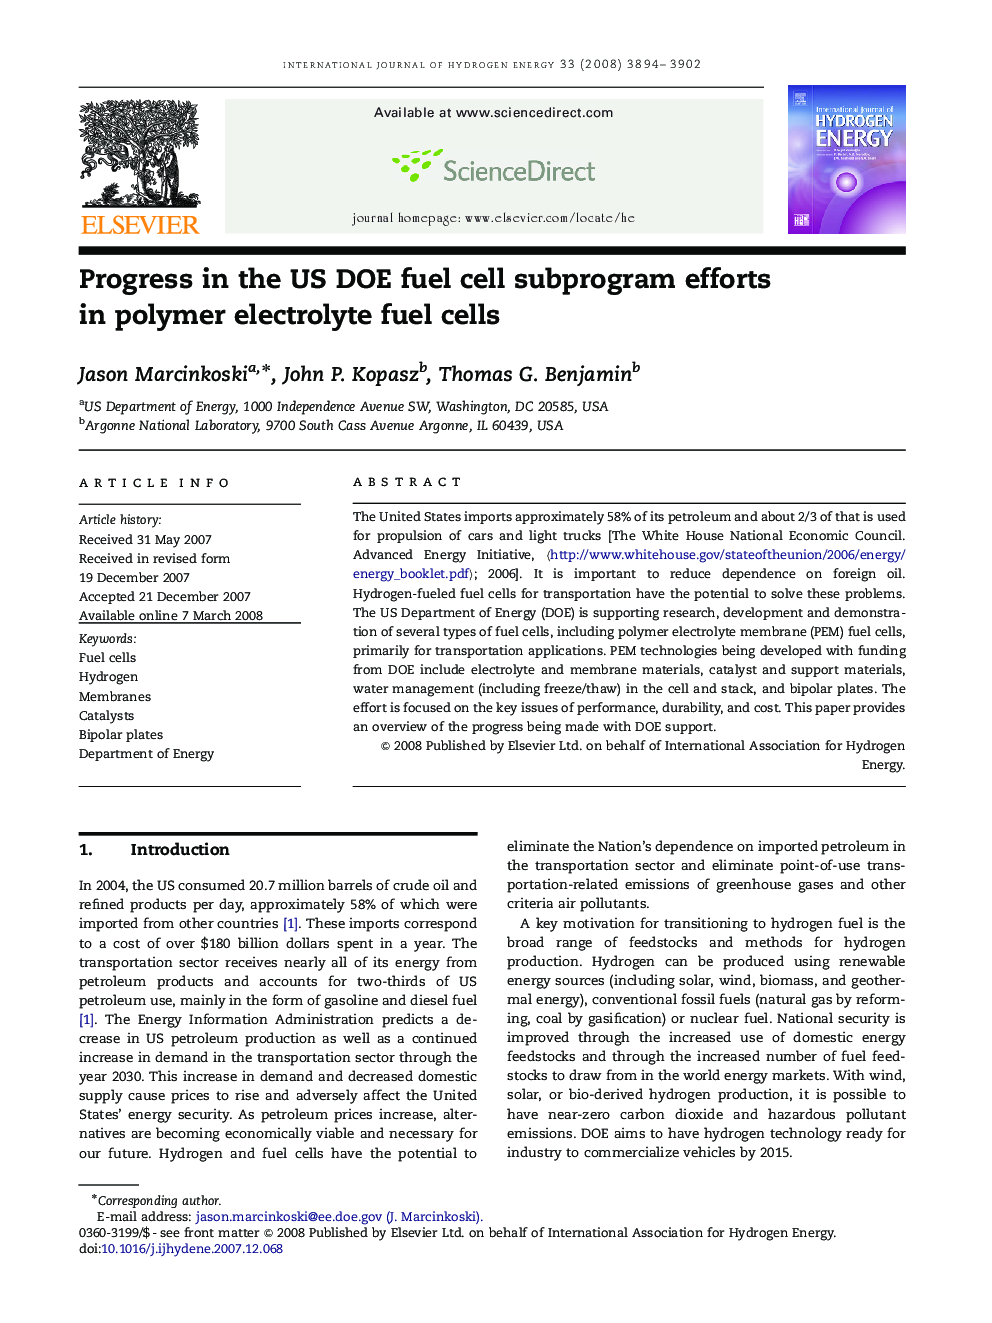 Progress in the US DOE fuel cell subprogram efforts in polymer electrolyte fuel cells